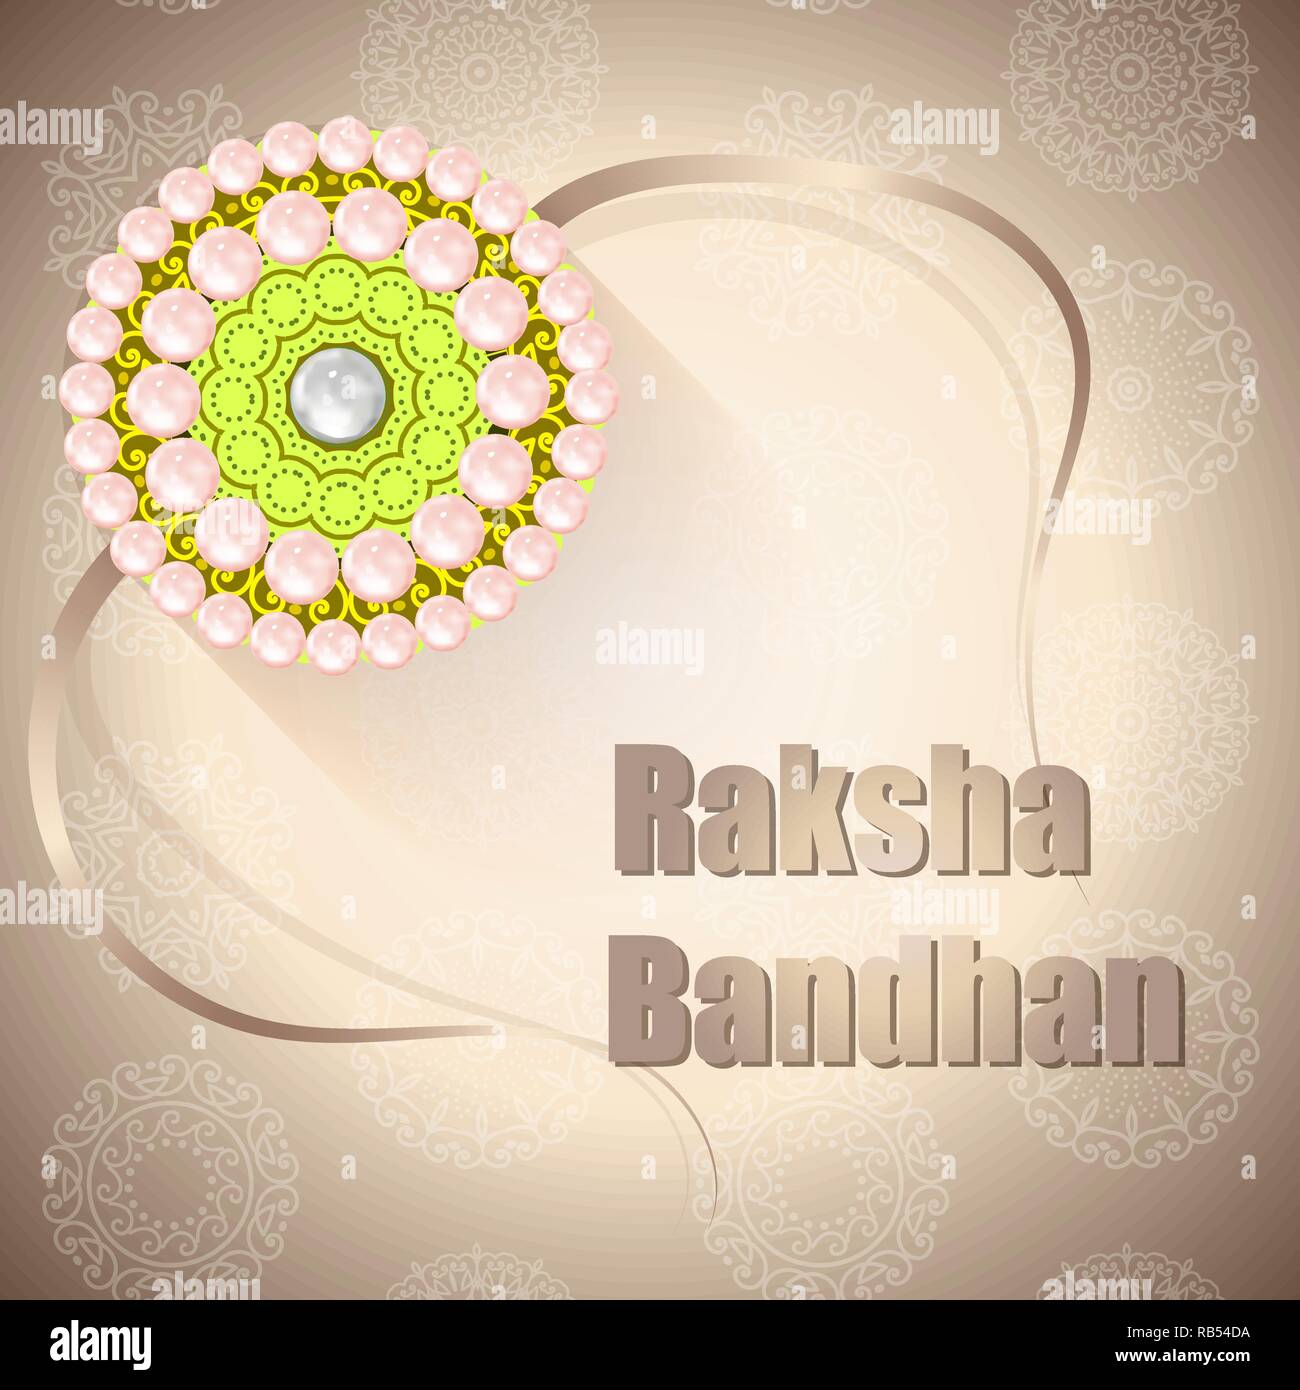 Raksha Bandhan Festival Greeting Card Template. Beautiful background with  illustration of rakhi. Design Vector Illustration Stock Vector Image & Art  - Alamy